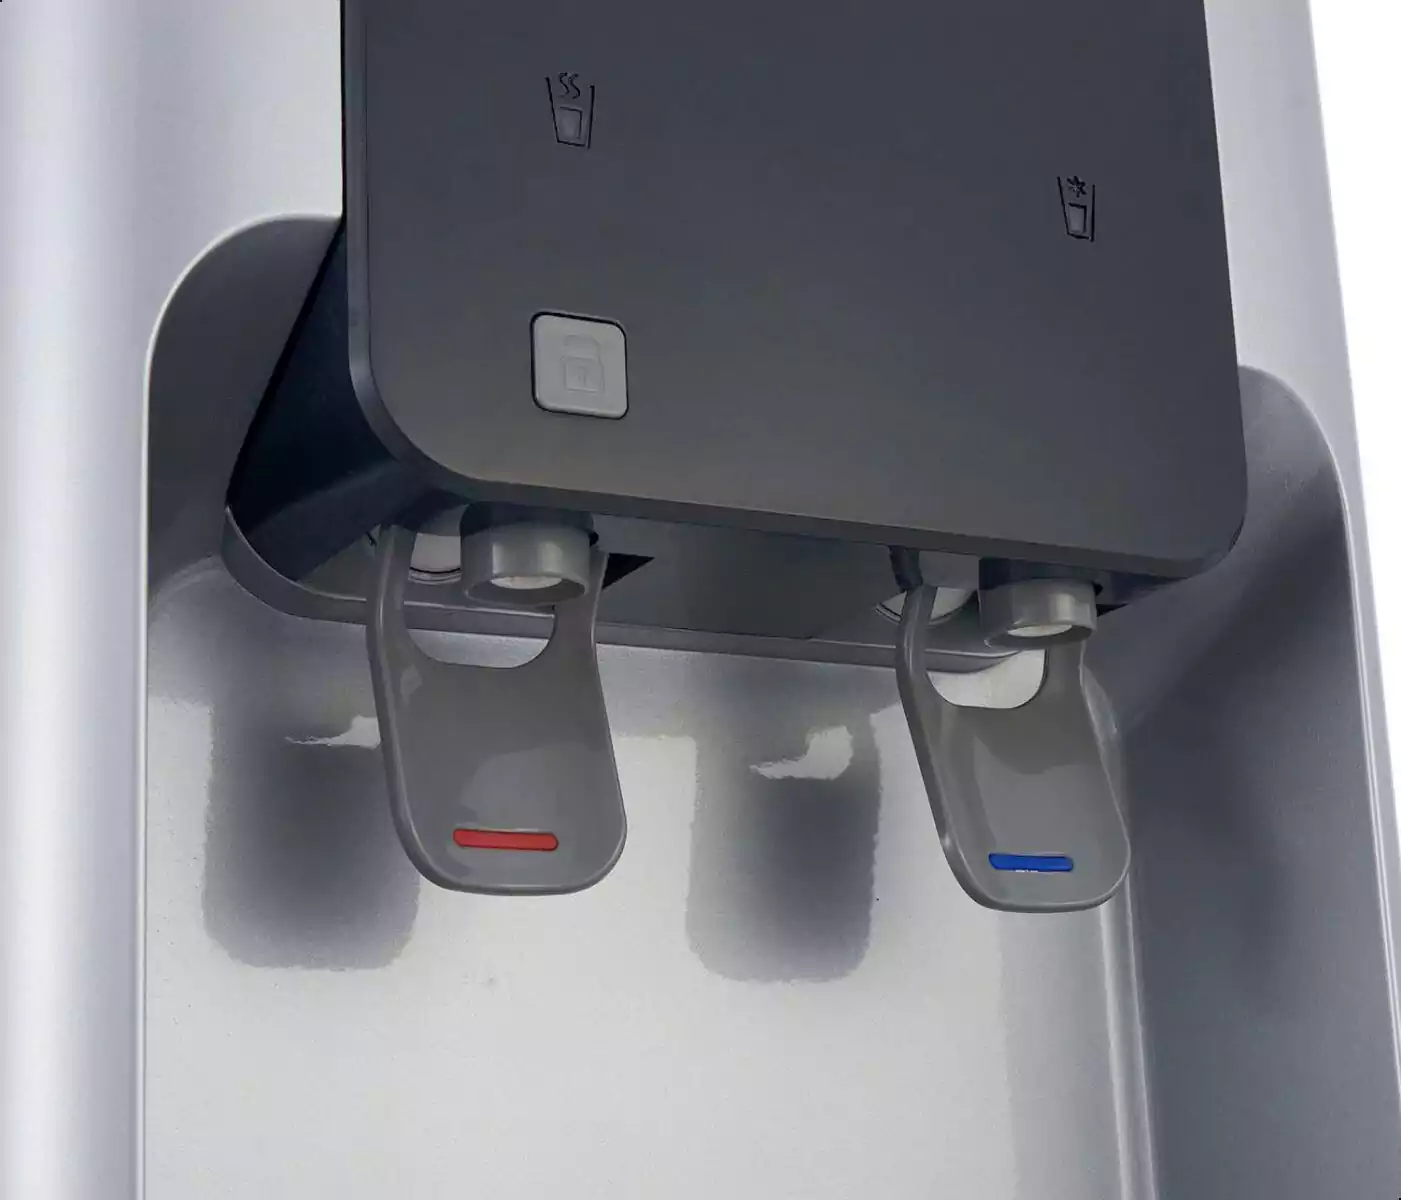 Koldair Water Dispenser, 2 Taps (Cold + Hot), Top Loading, Cabinet, Silver, KWD-B2.1